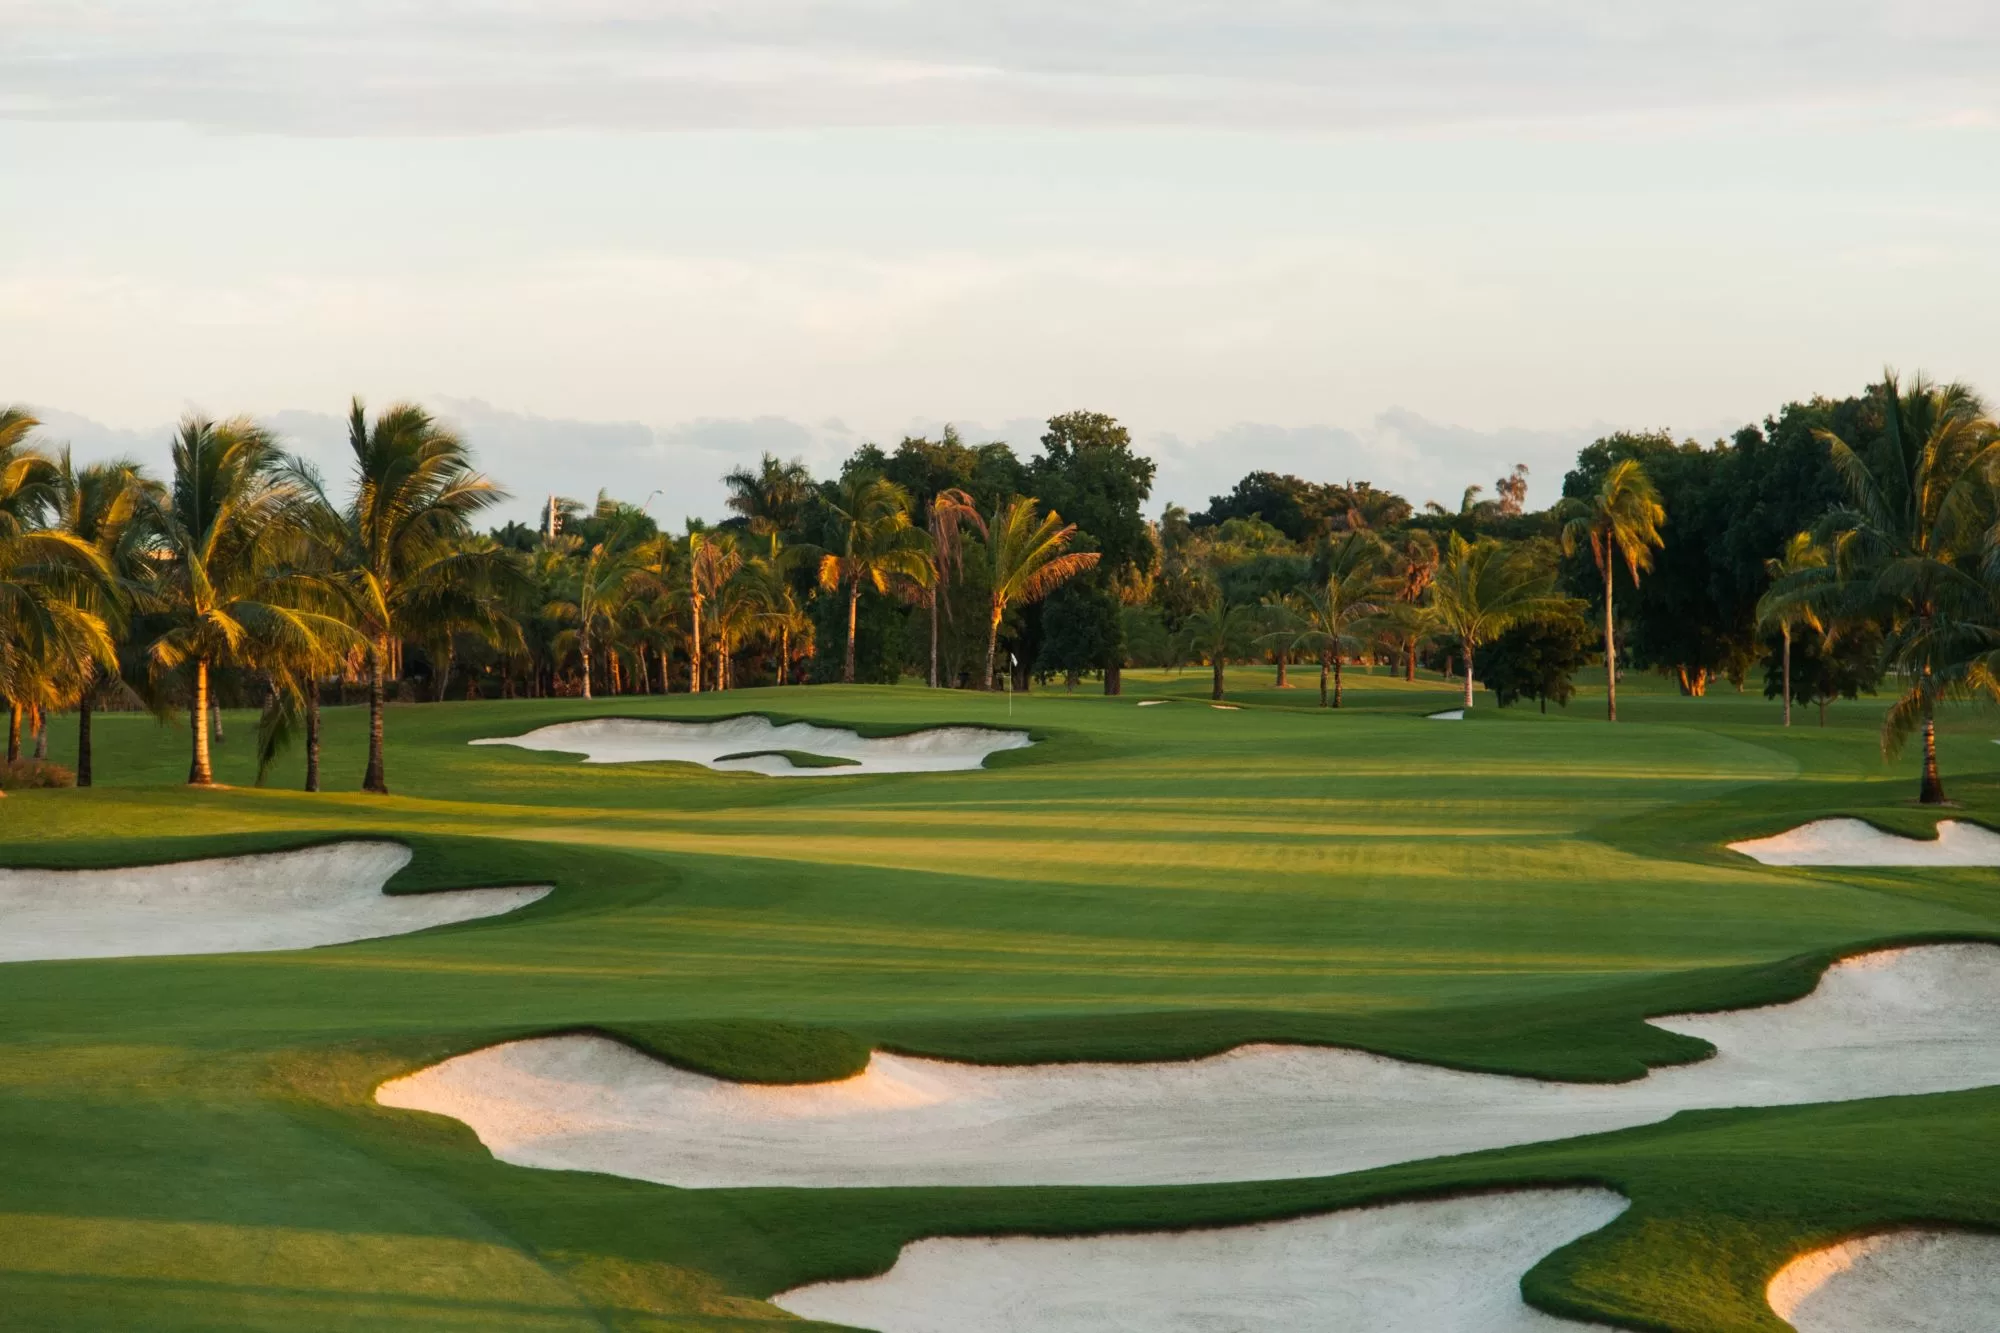 Tour Miami’s legendary golf courses